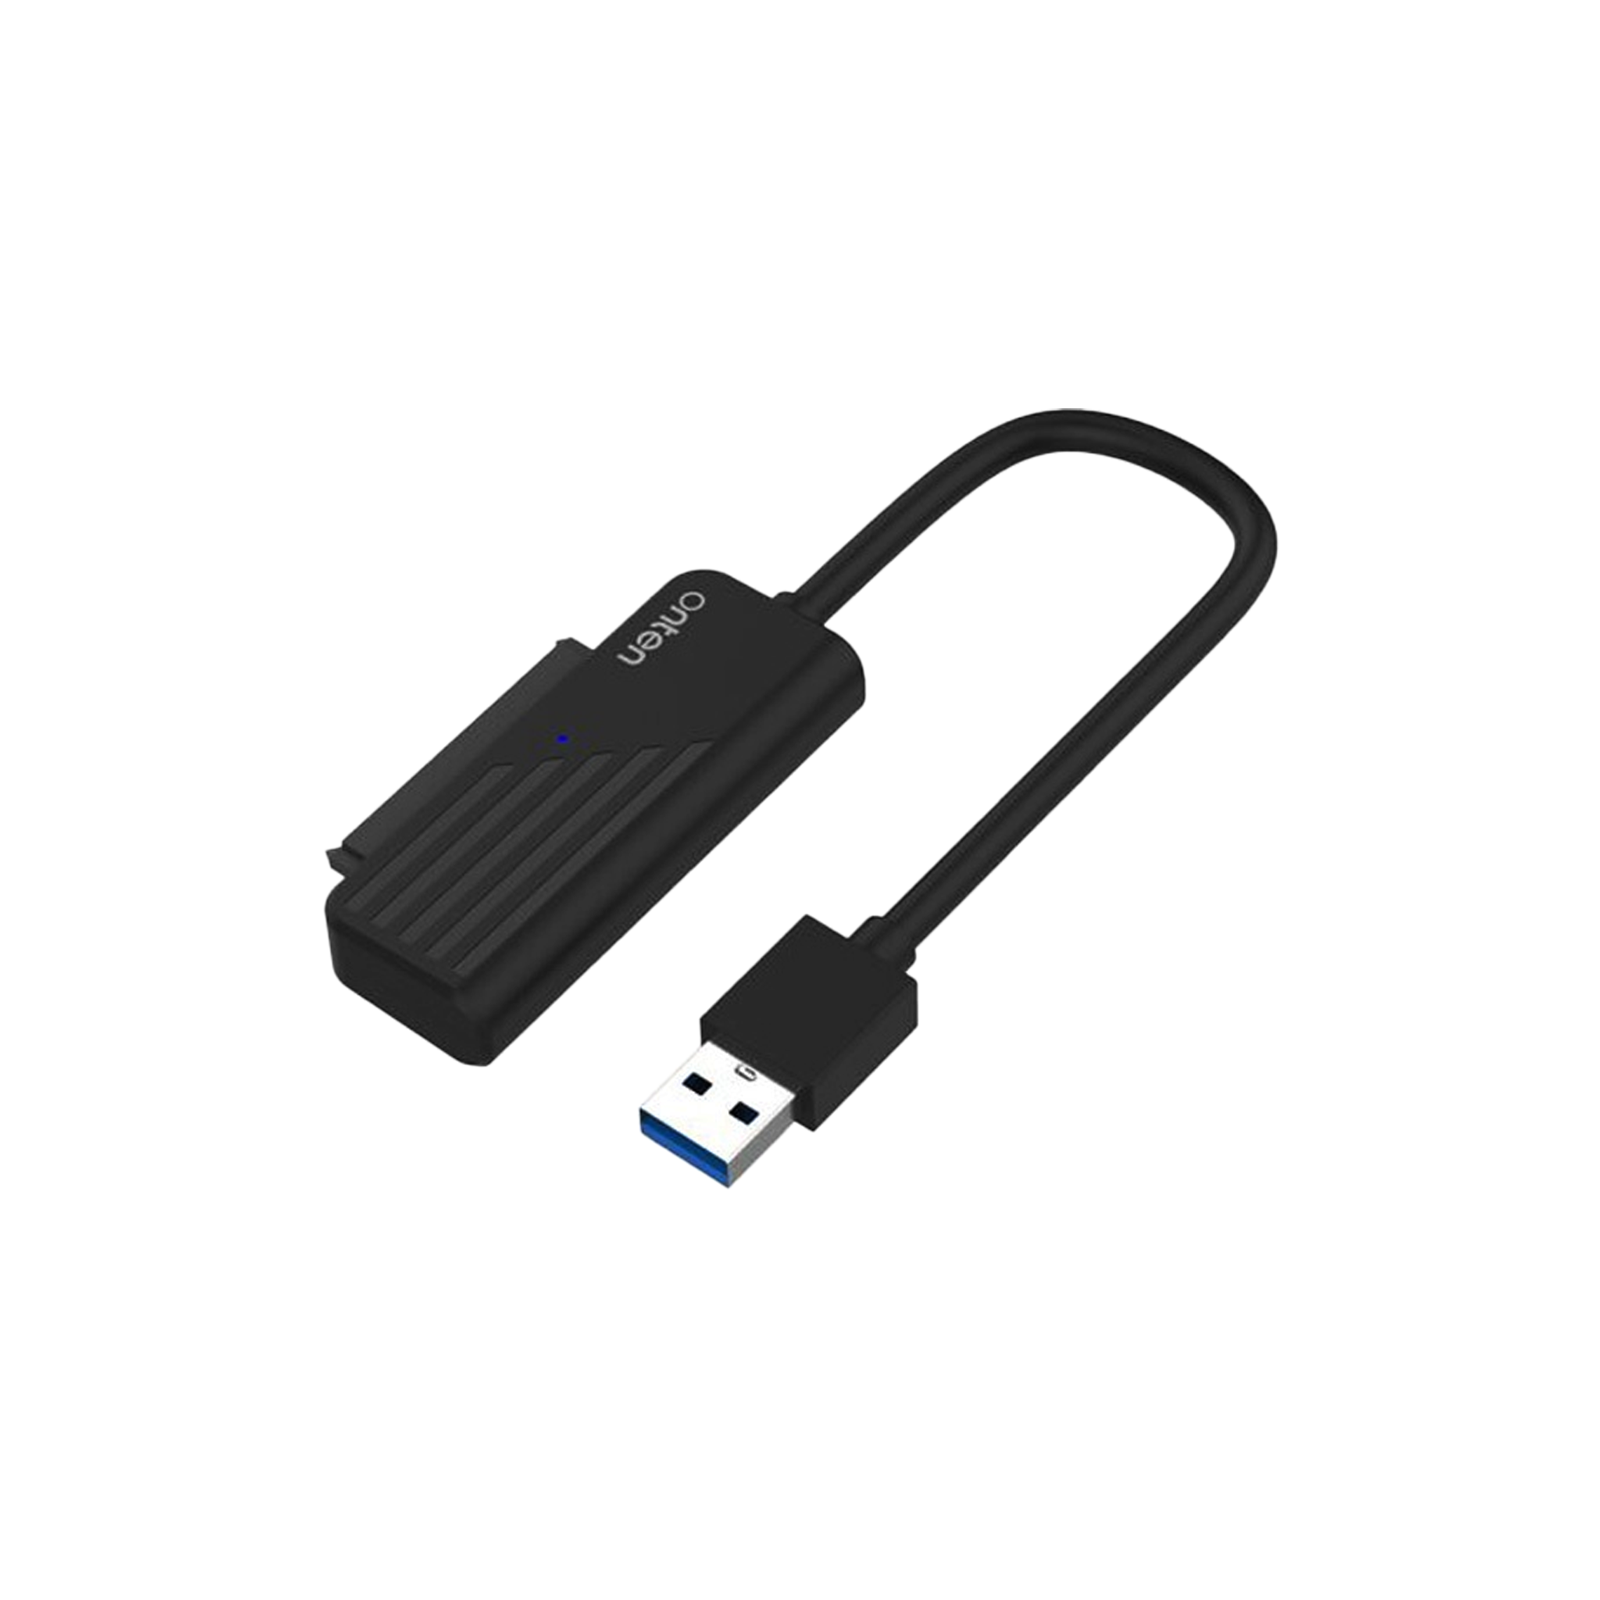 USB TO SATA Cable Onten otnUS301